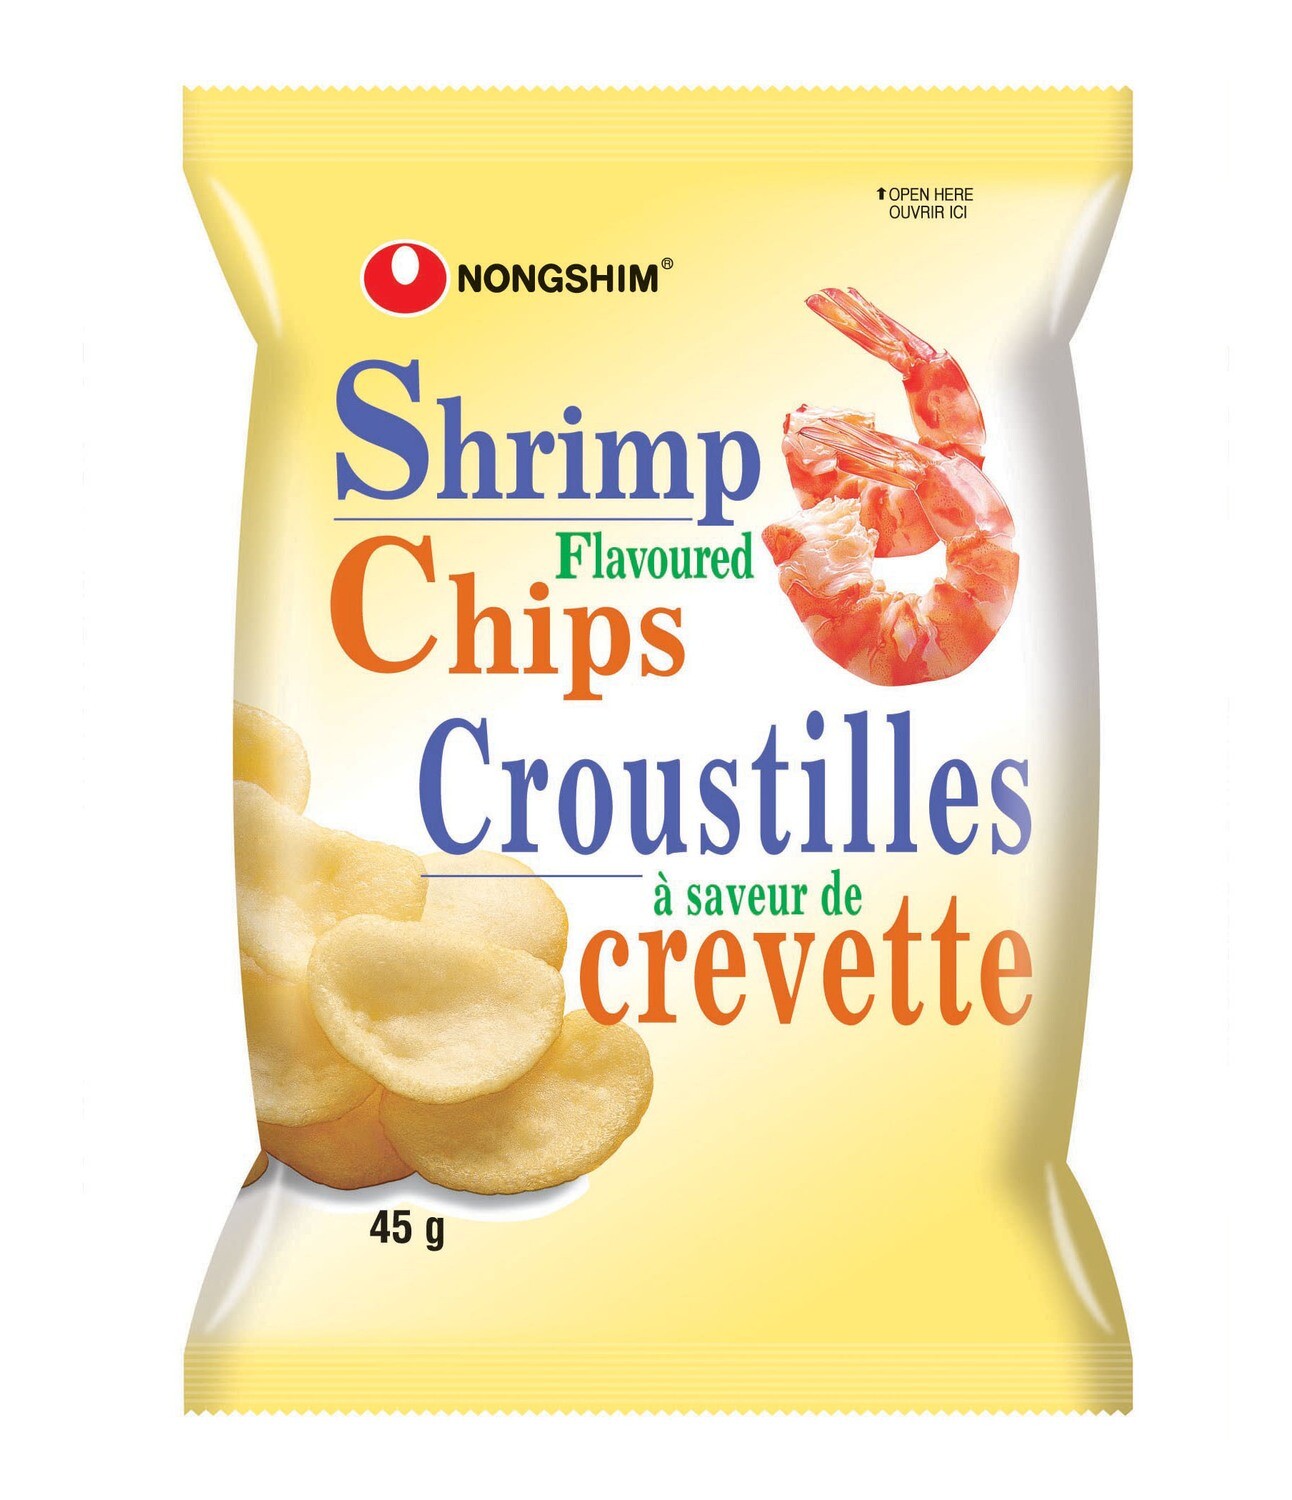 Nongshim Shrimp Chips (45g)